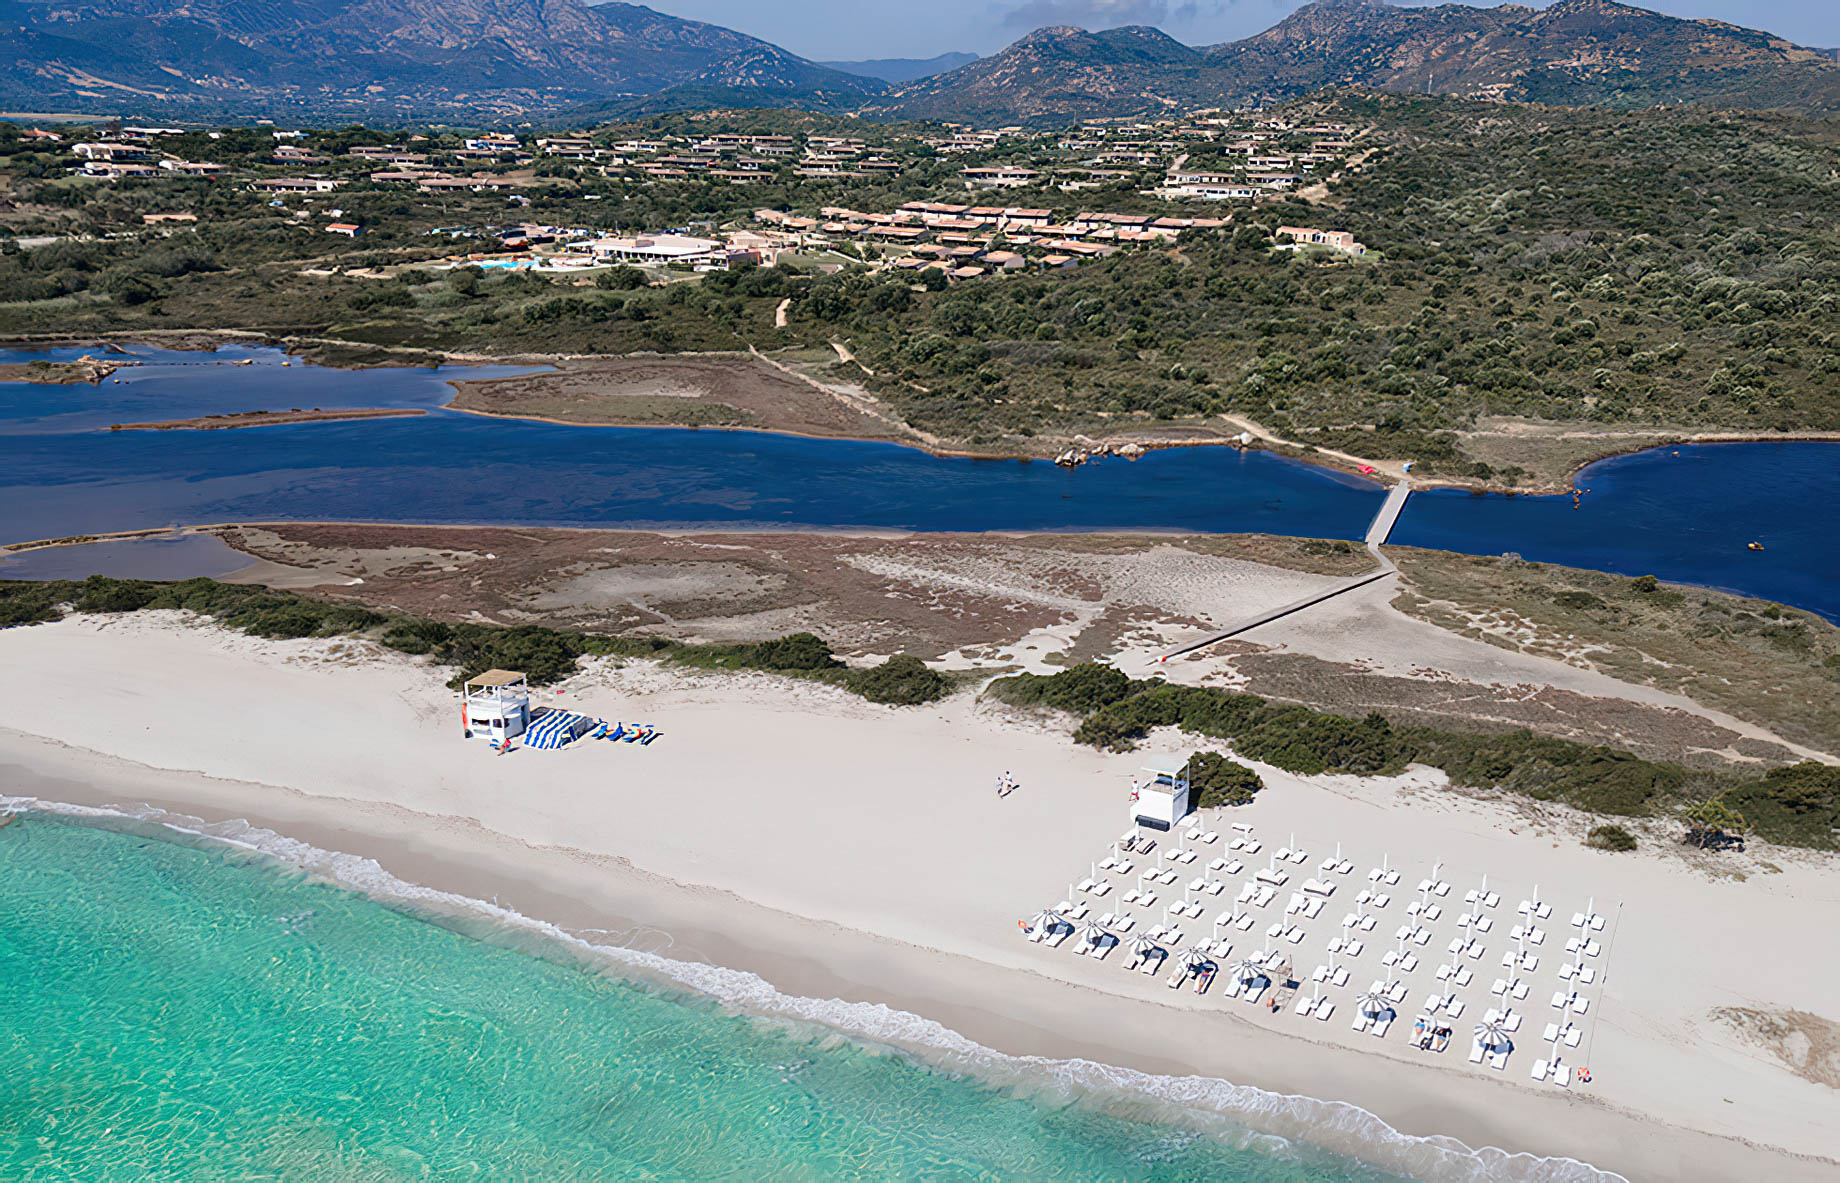 Baglioni Resort Sardinia - San Teodoro, Sardegna, Italy - Beach Aerial View